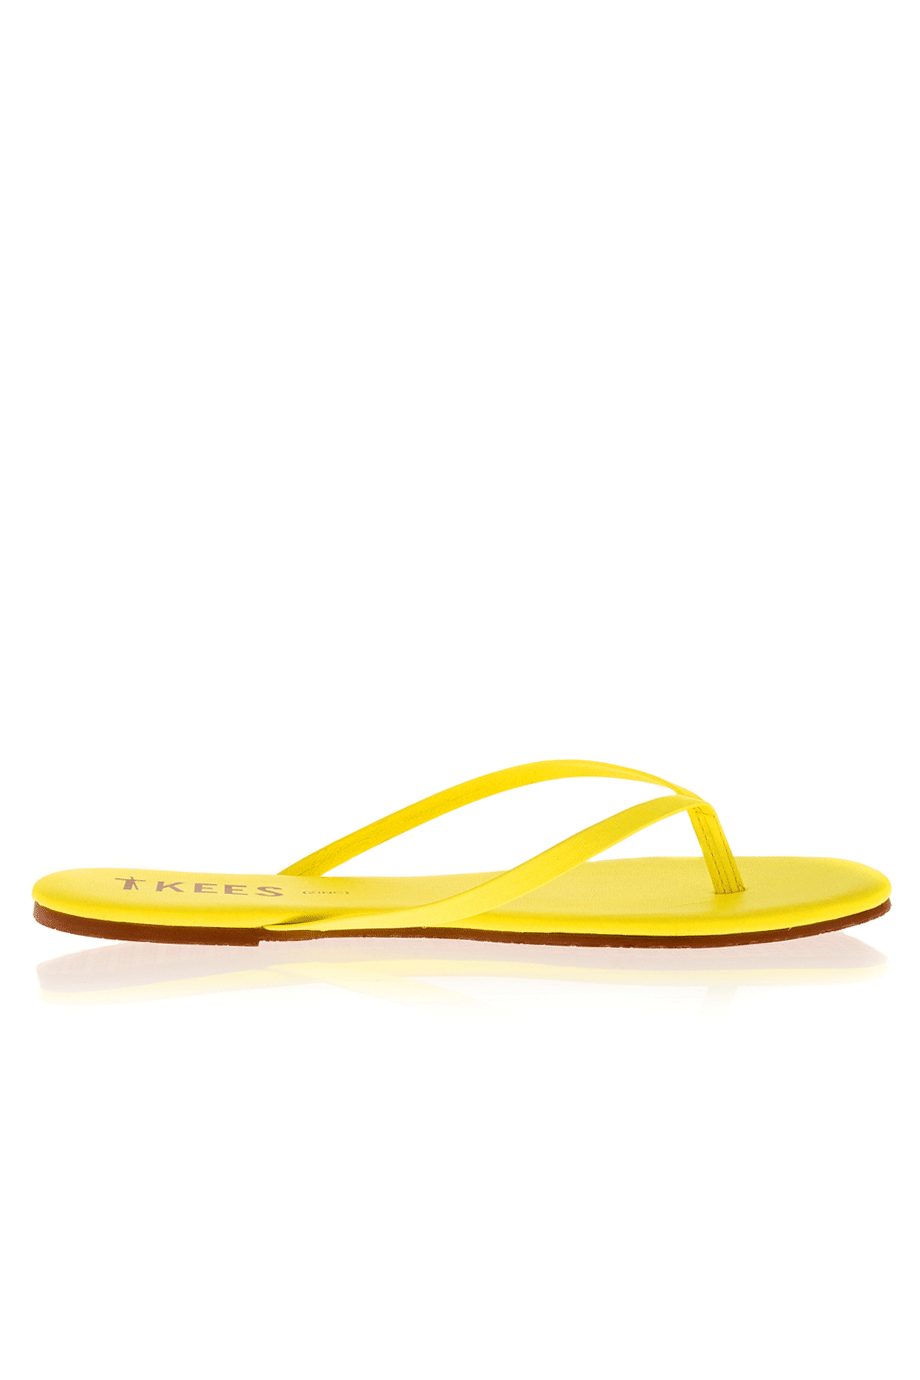 Neon Κίτρινα Δερμάτινα Σανδάλια - Tkees | Γυναικεία Παπούτσια